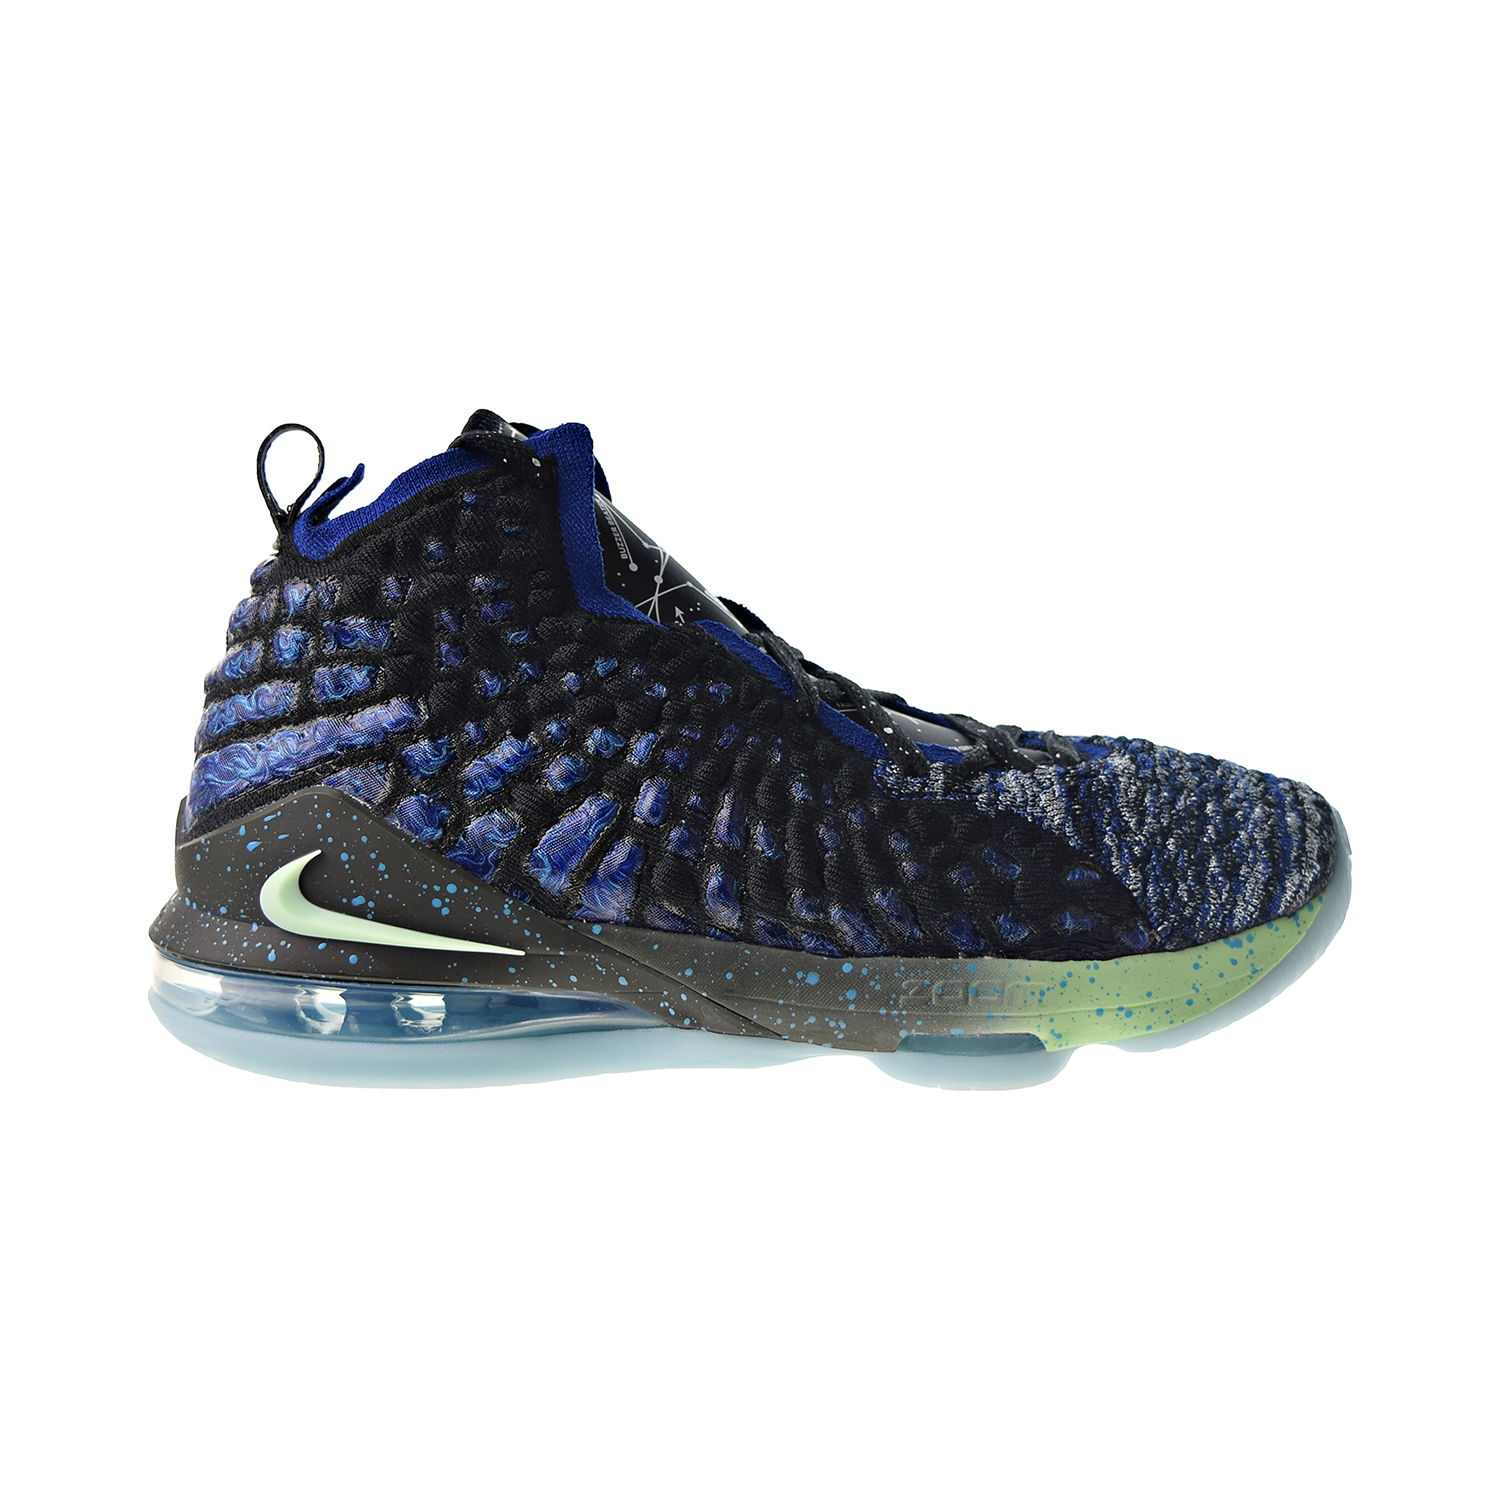 Nike LeBron XVII ‘Constellations’ Big Kids' Shoes Deep Royal Blue-Vapor Green bq5594-407 - image 1 of 6